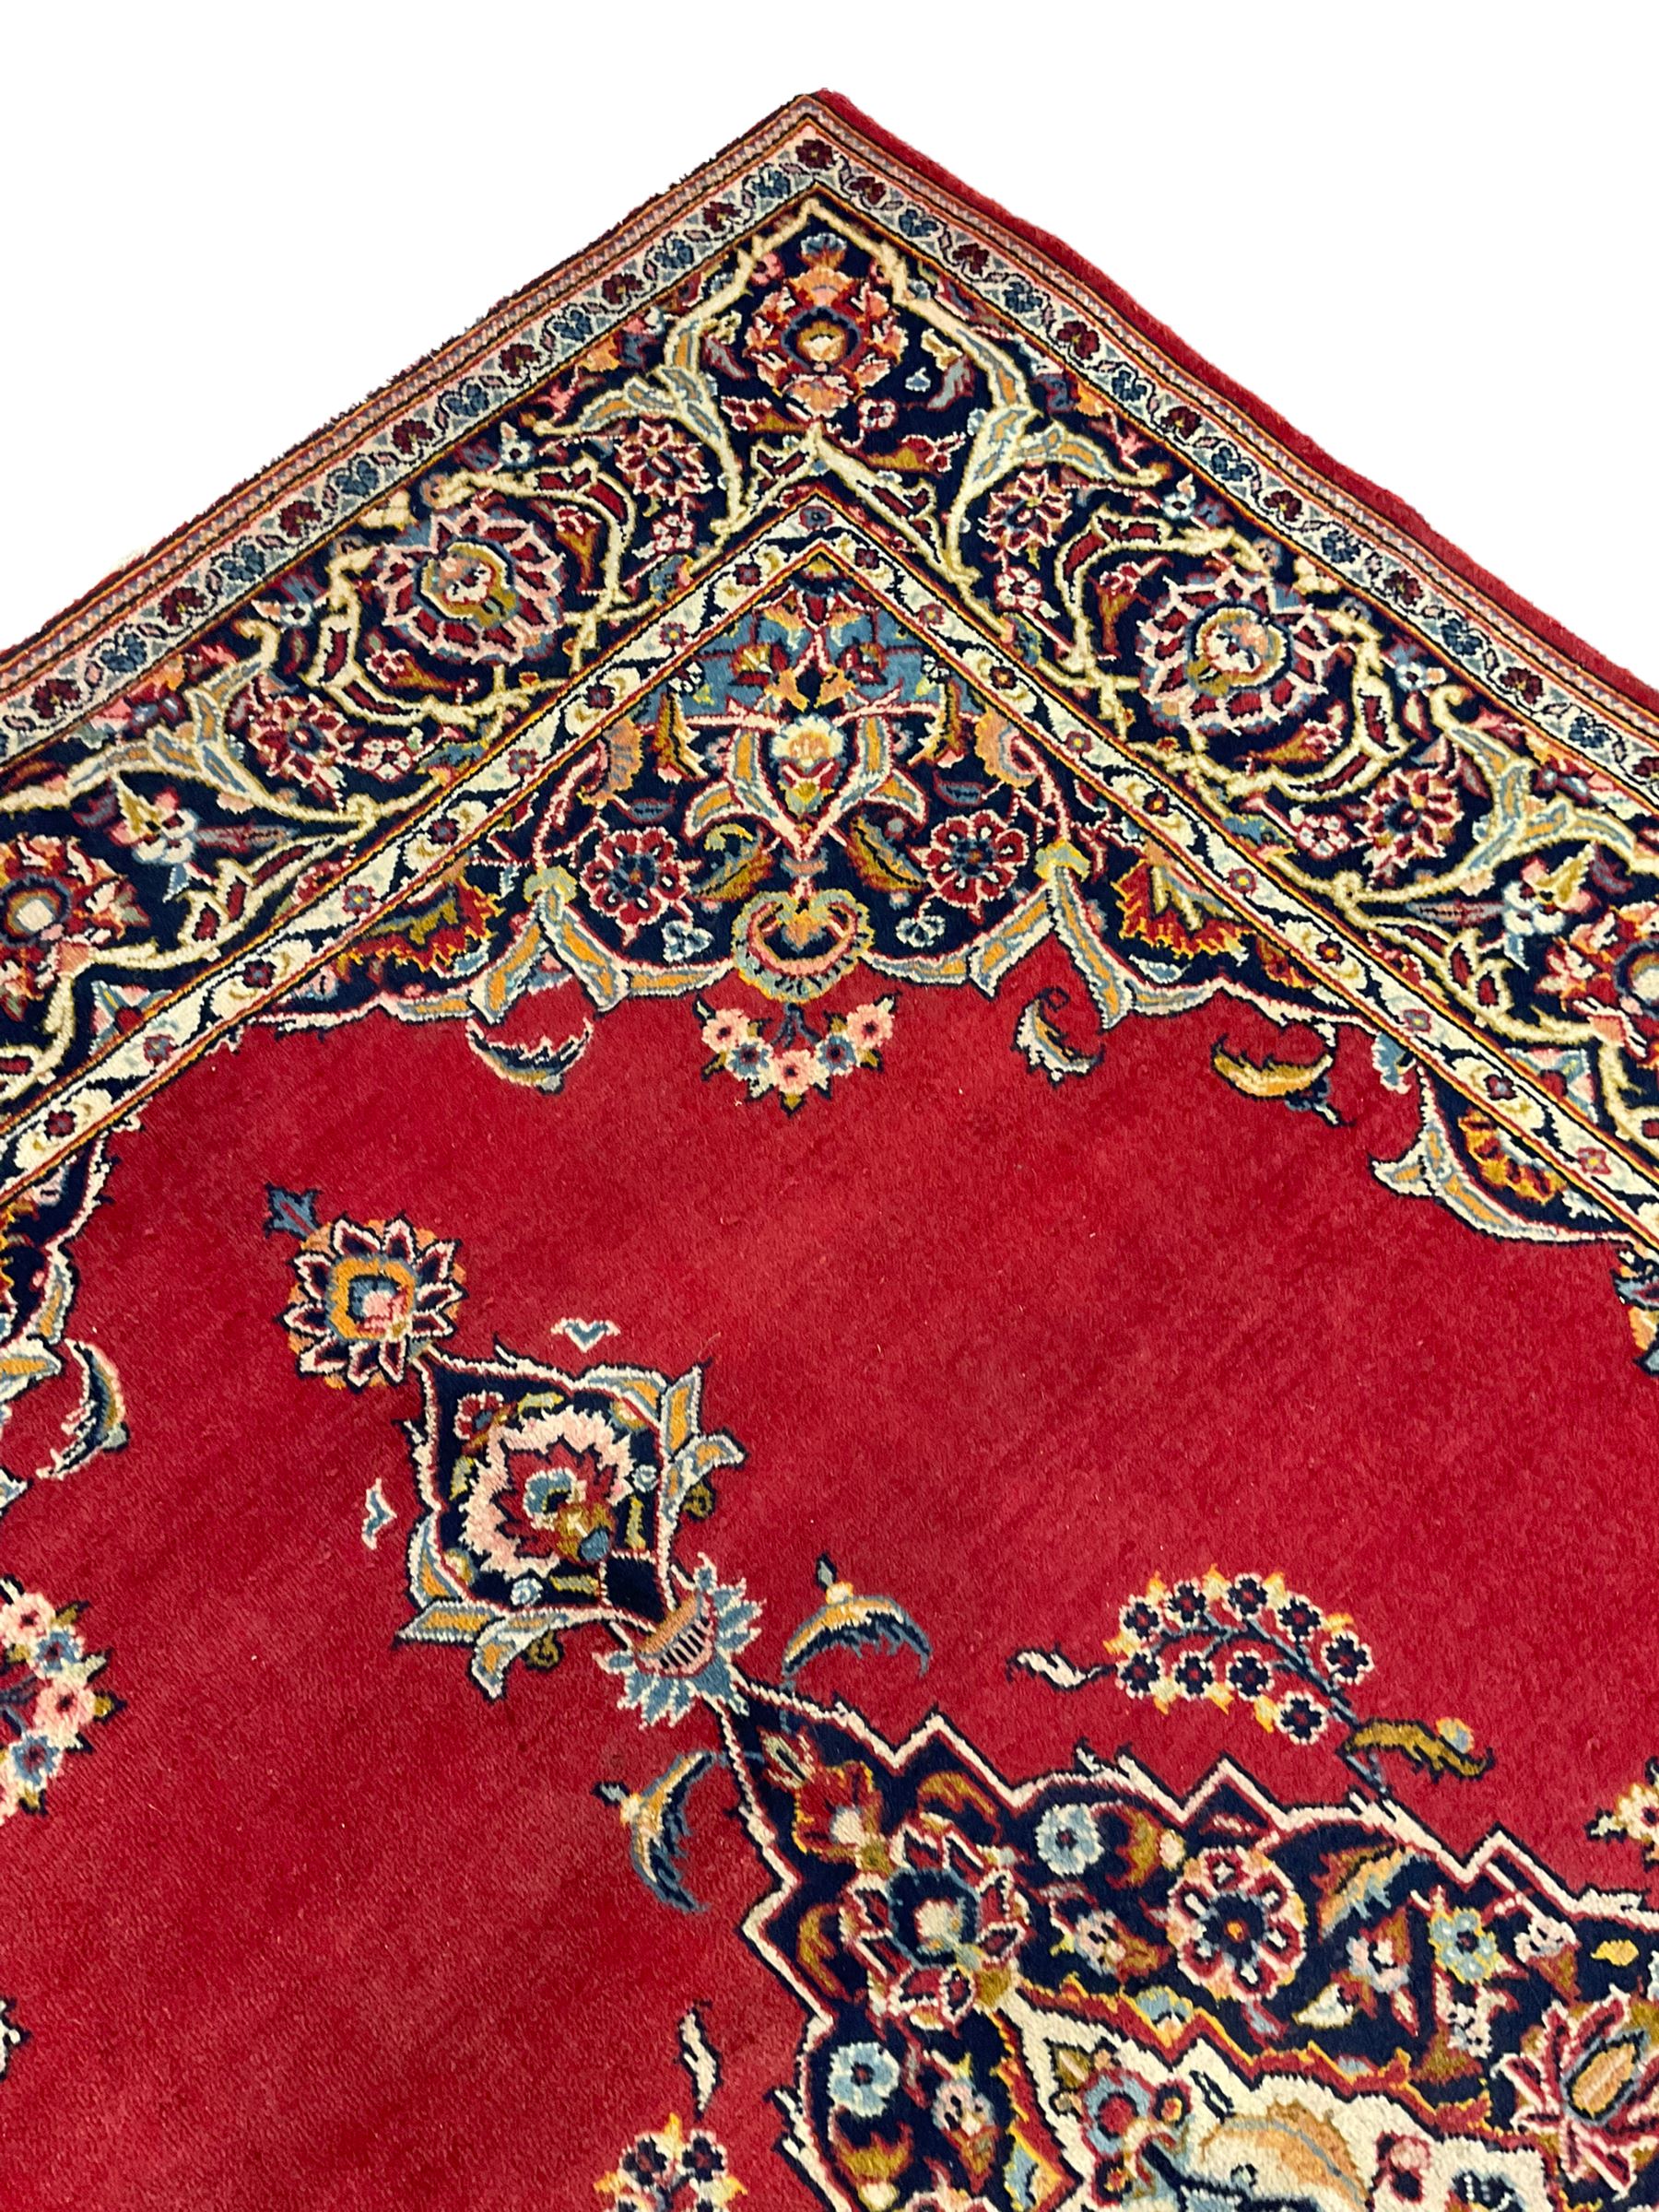 Persian Kashan red ground rug - Image 5 of 5